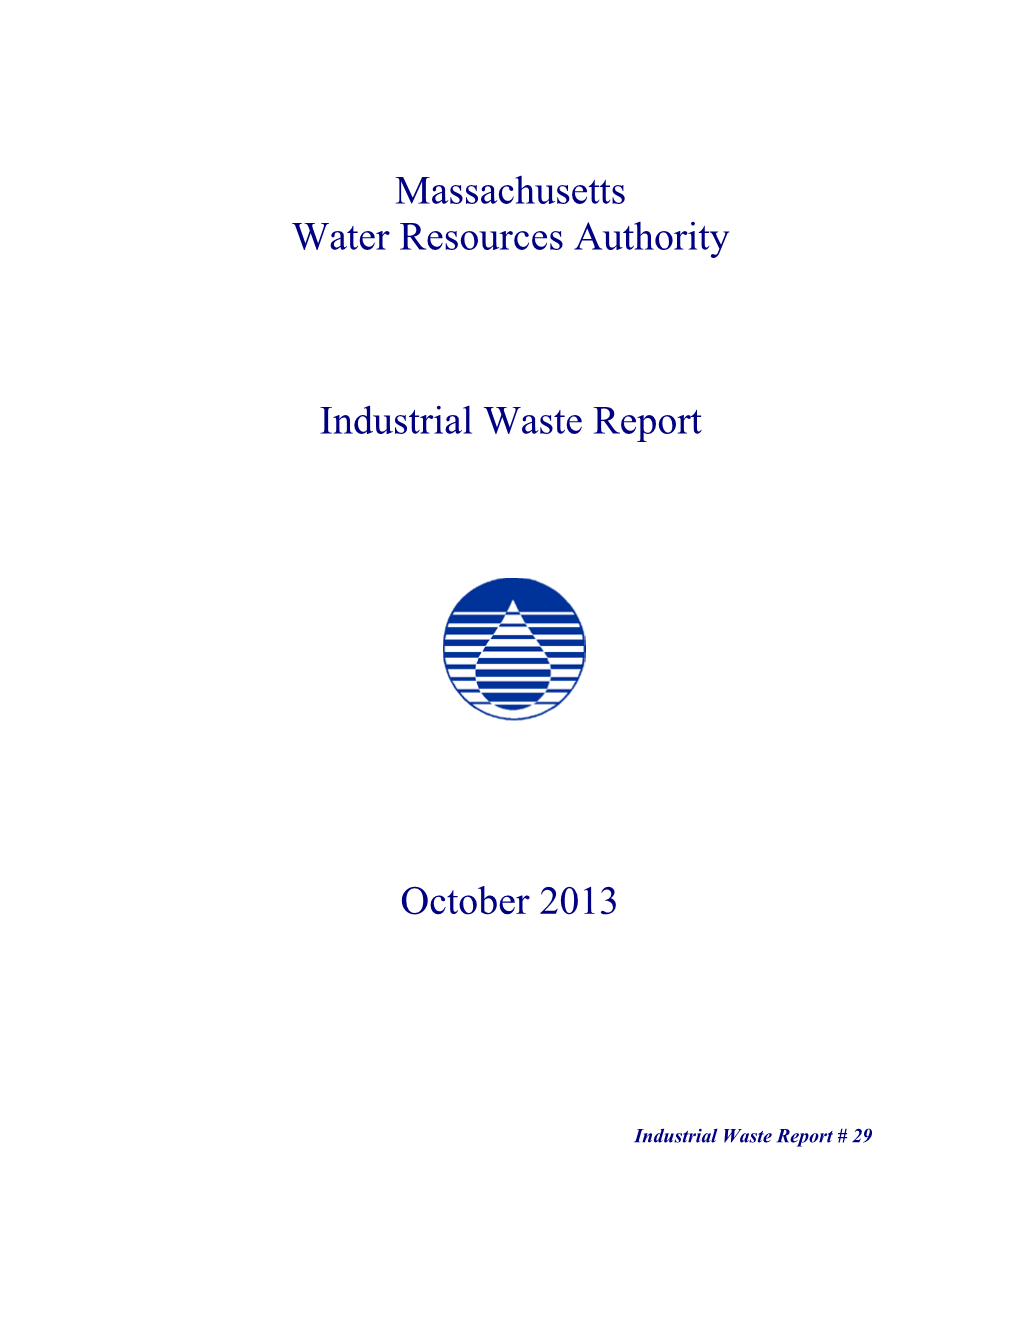 Massachusetts Water Resources Authority Industrial Waste Report October 2013